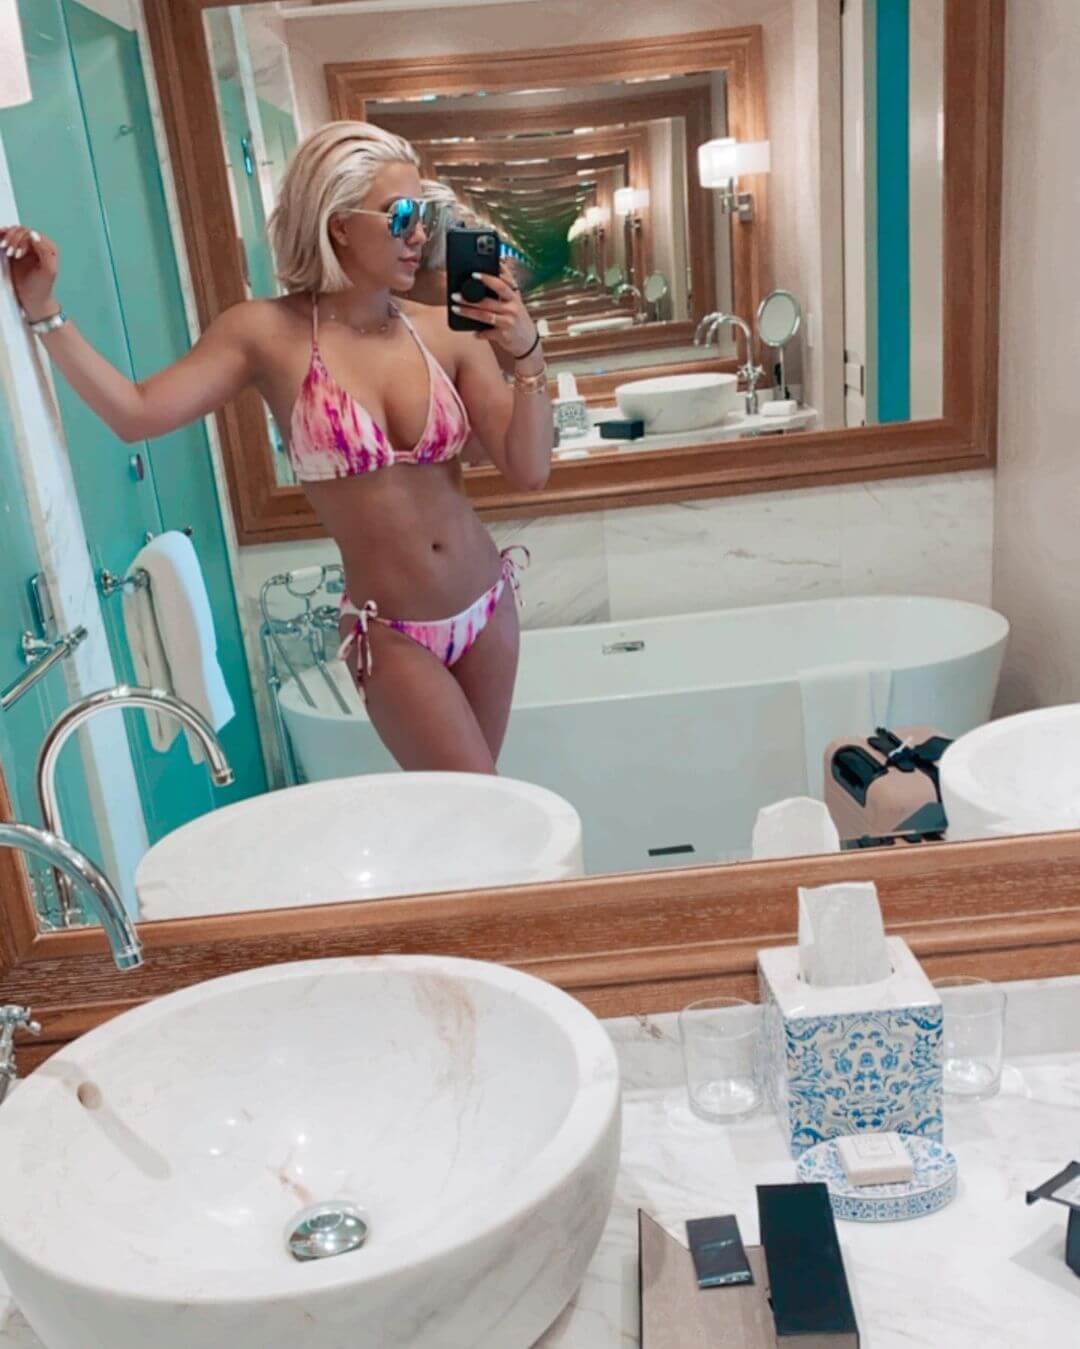 Savannah Chrisley in a sexy bikini suit. 